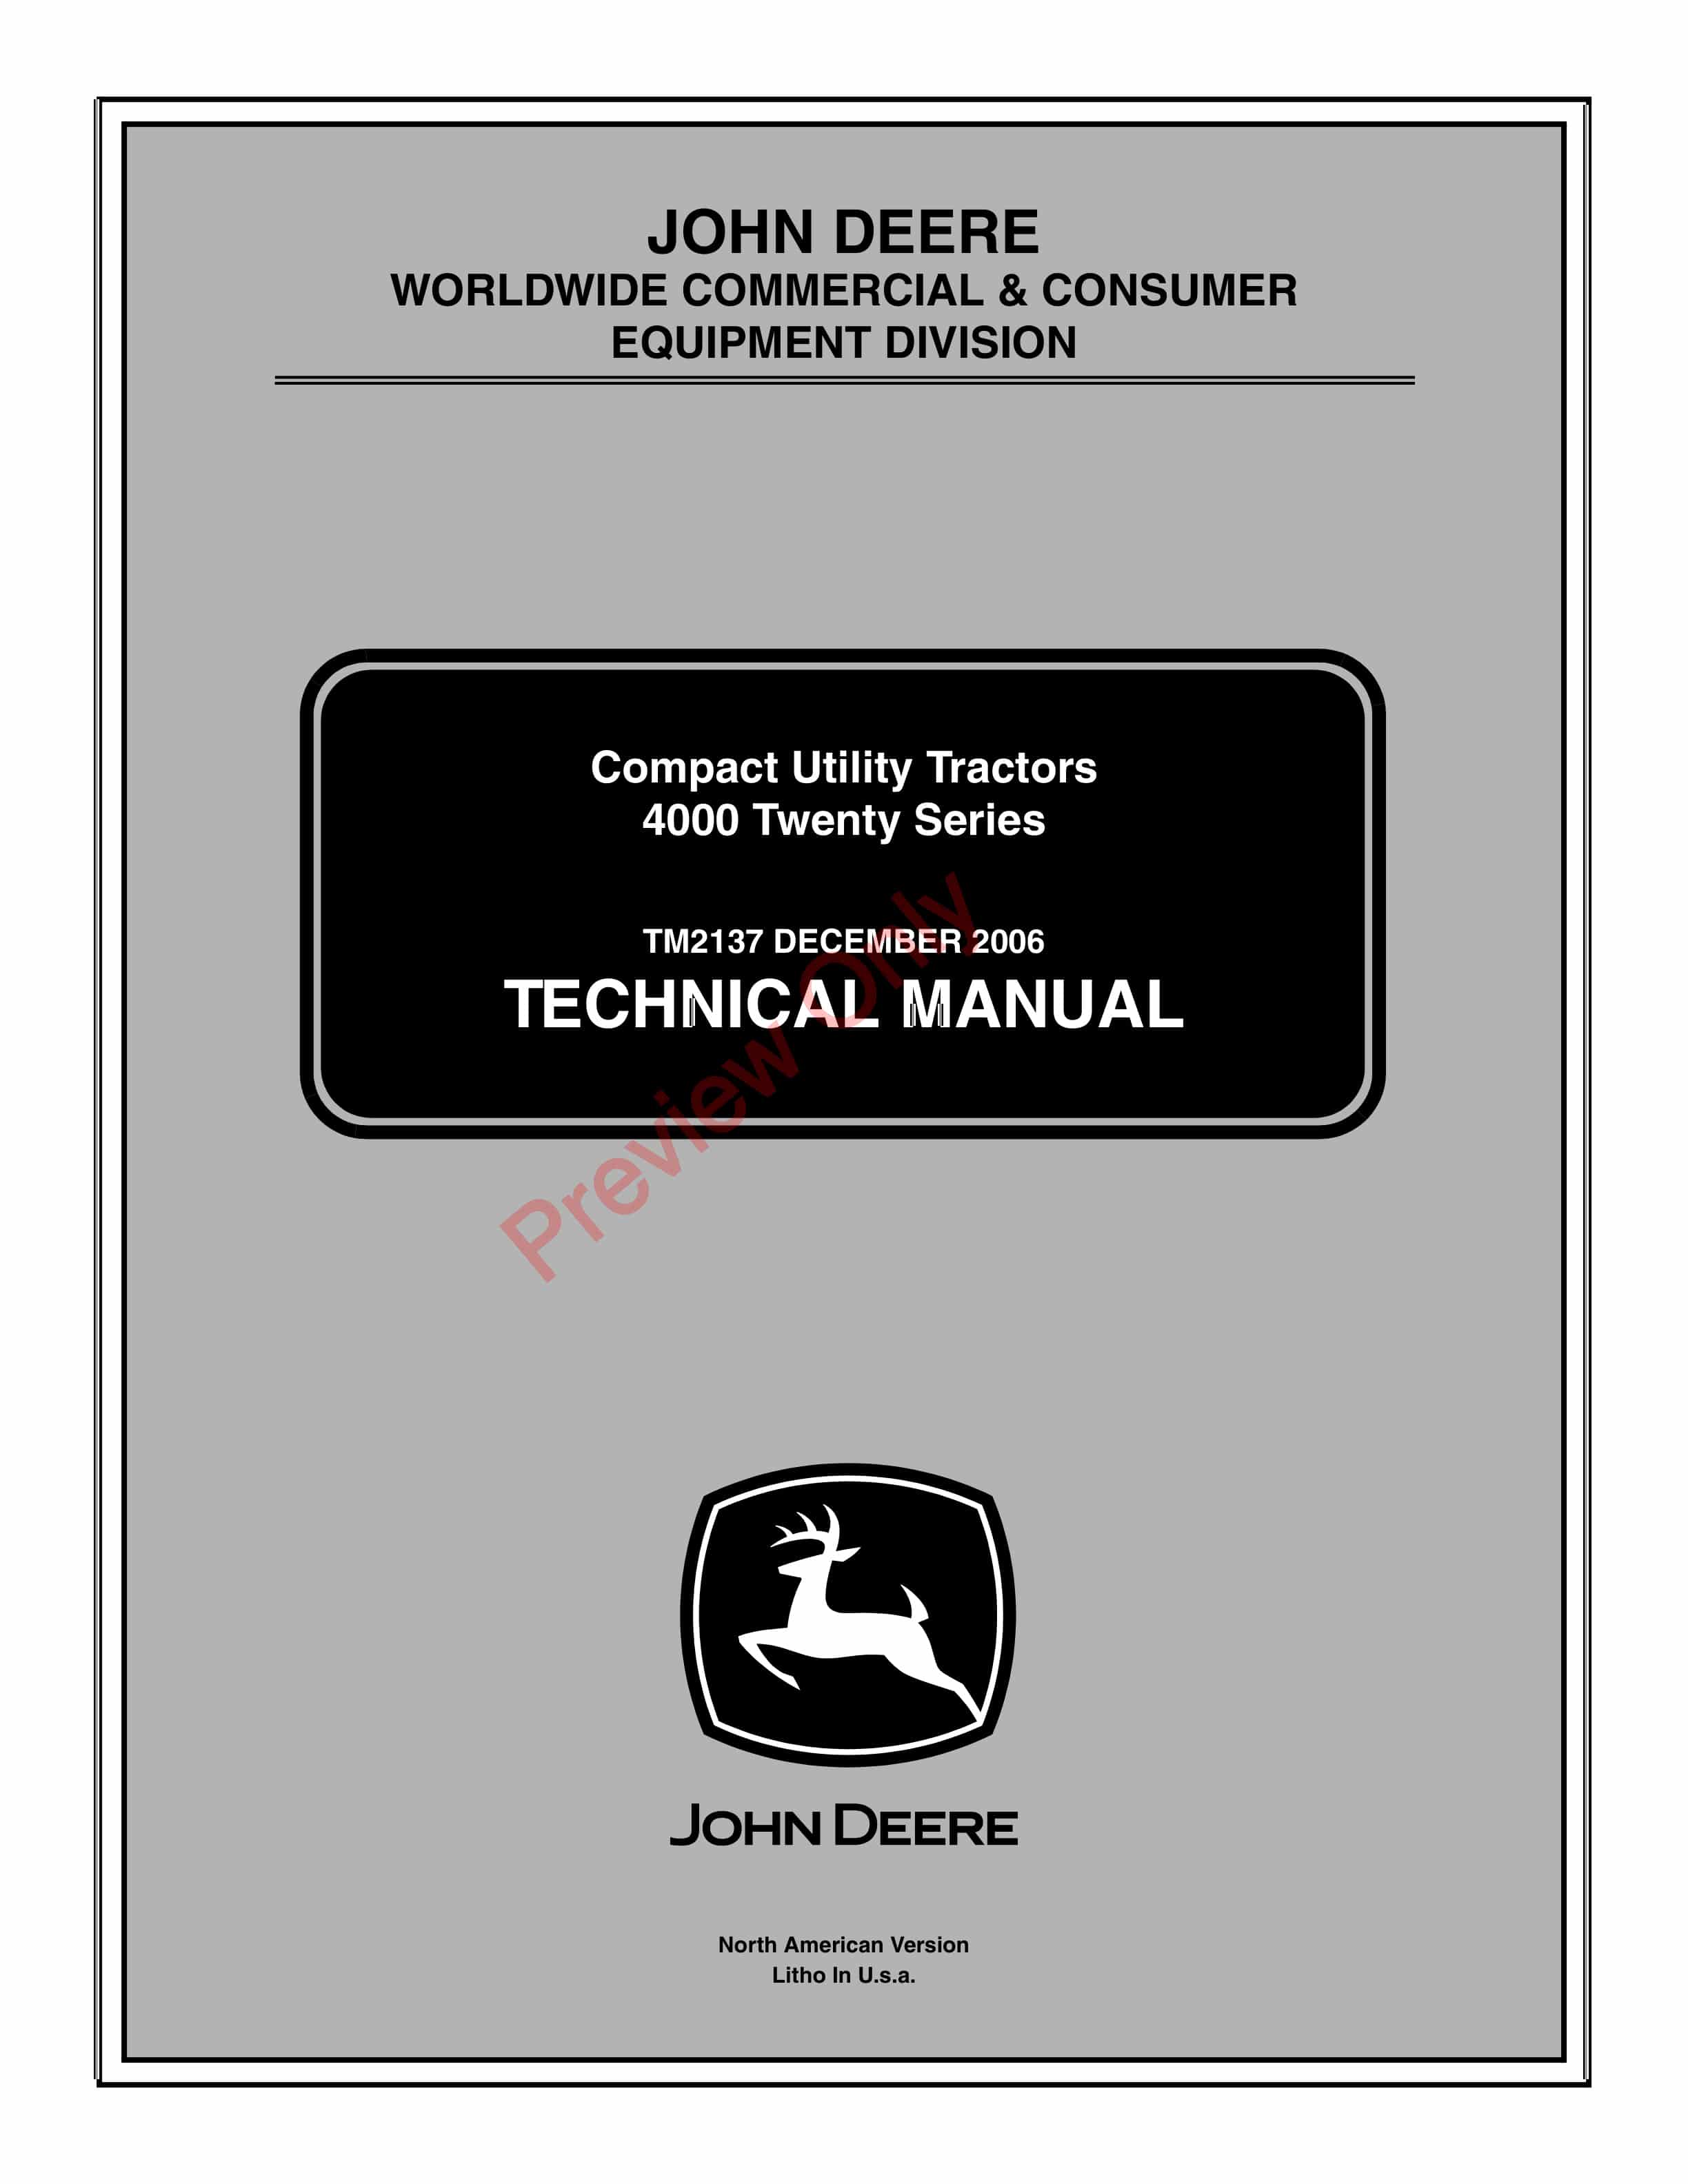 John Deere 4120 120101 610000 4320 130101 Technical Manual TM2137 01DEC06 1